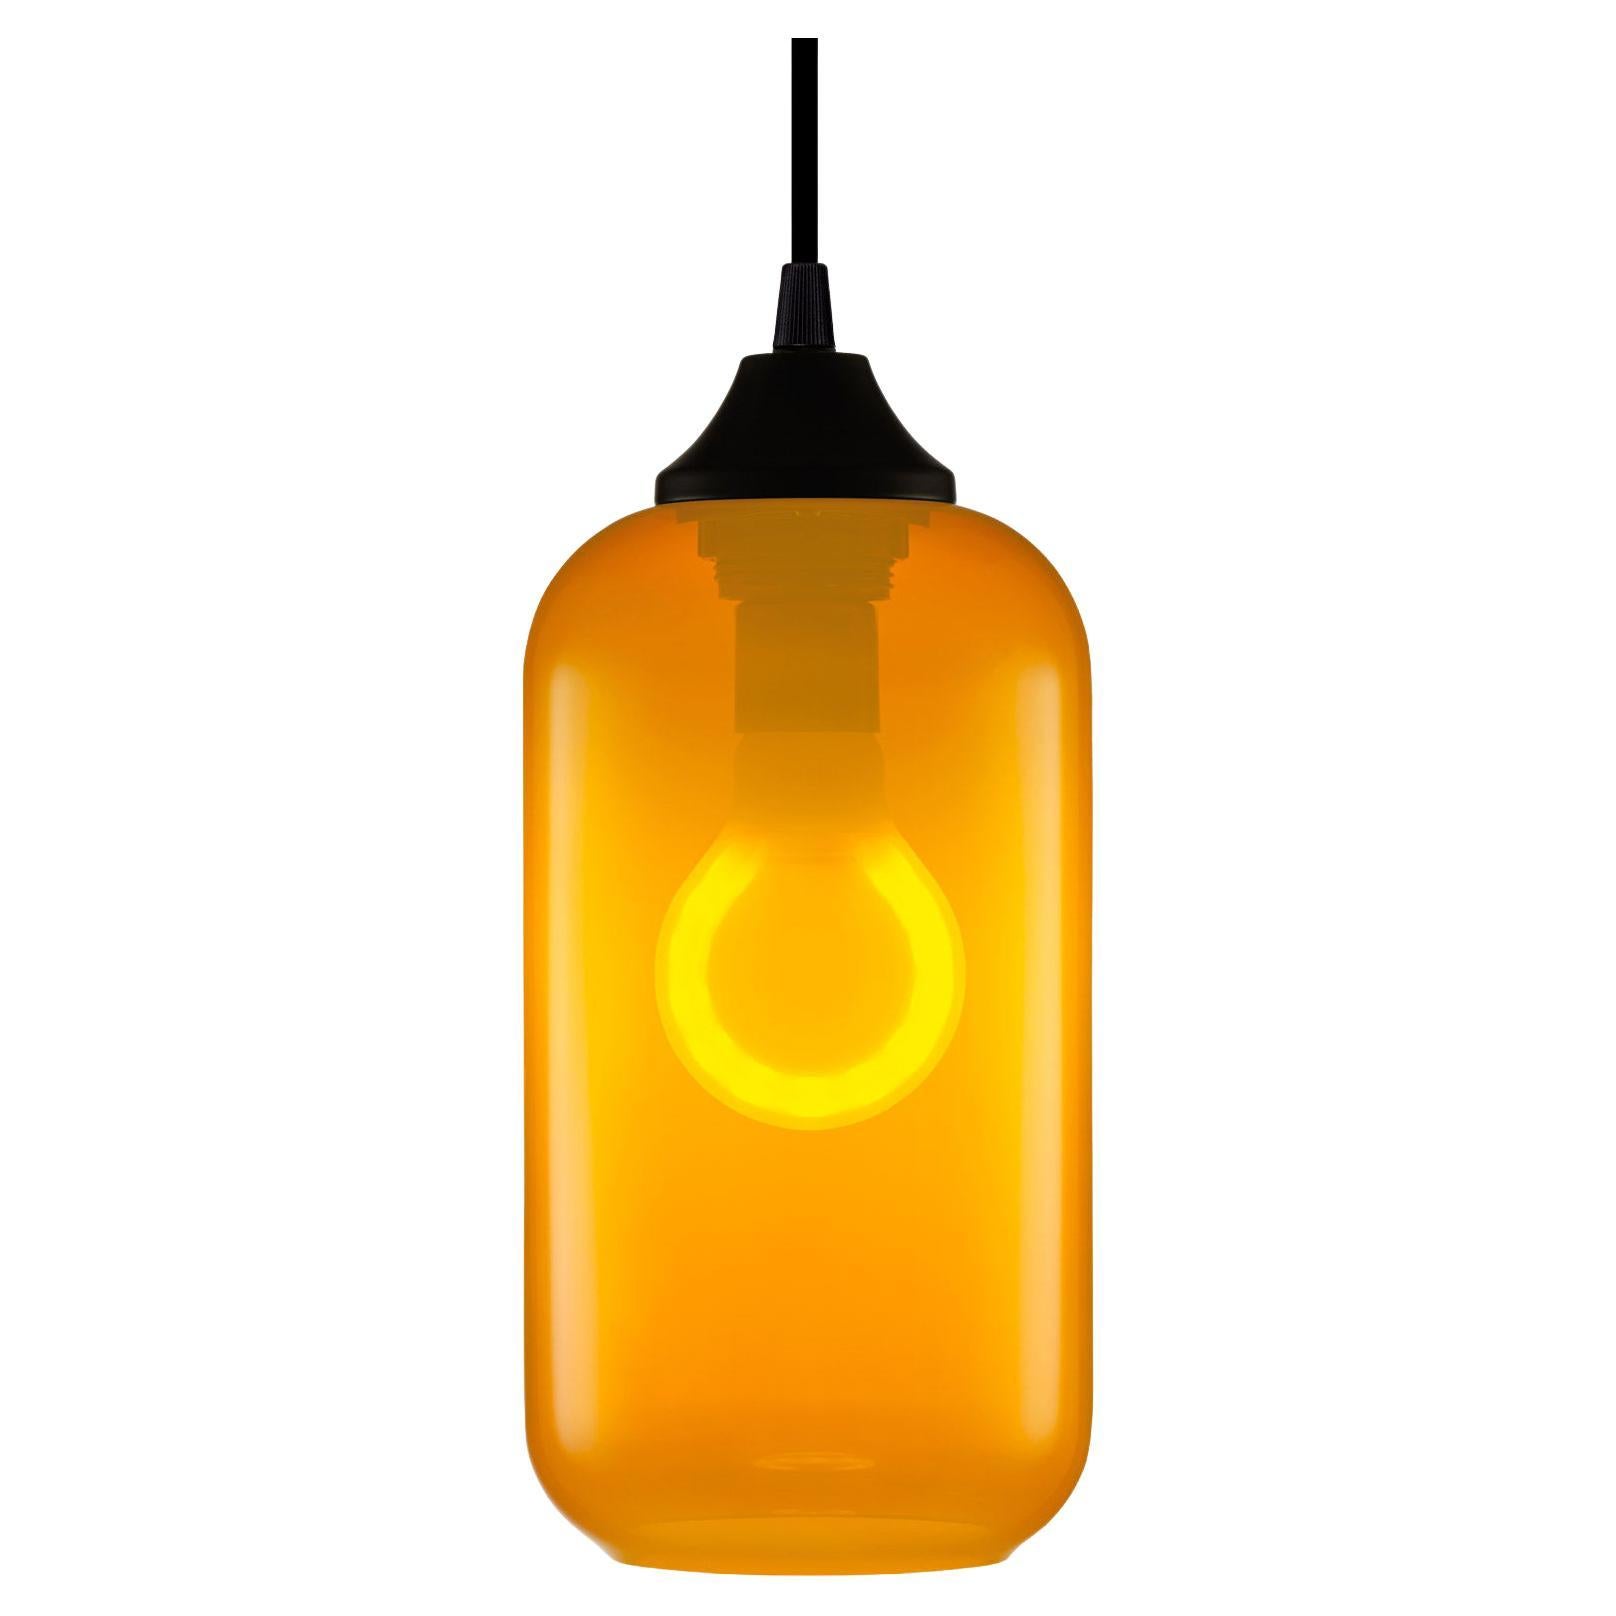 Helio Chroma Tangerine Handblown Modern Glass Pendant Light, Made in the USA For Sale